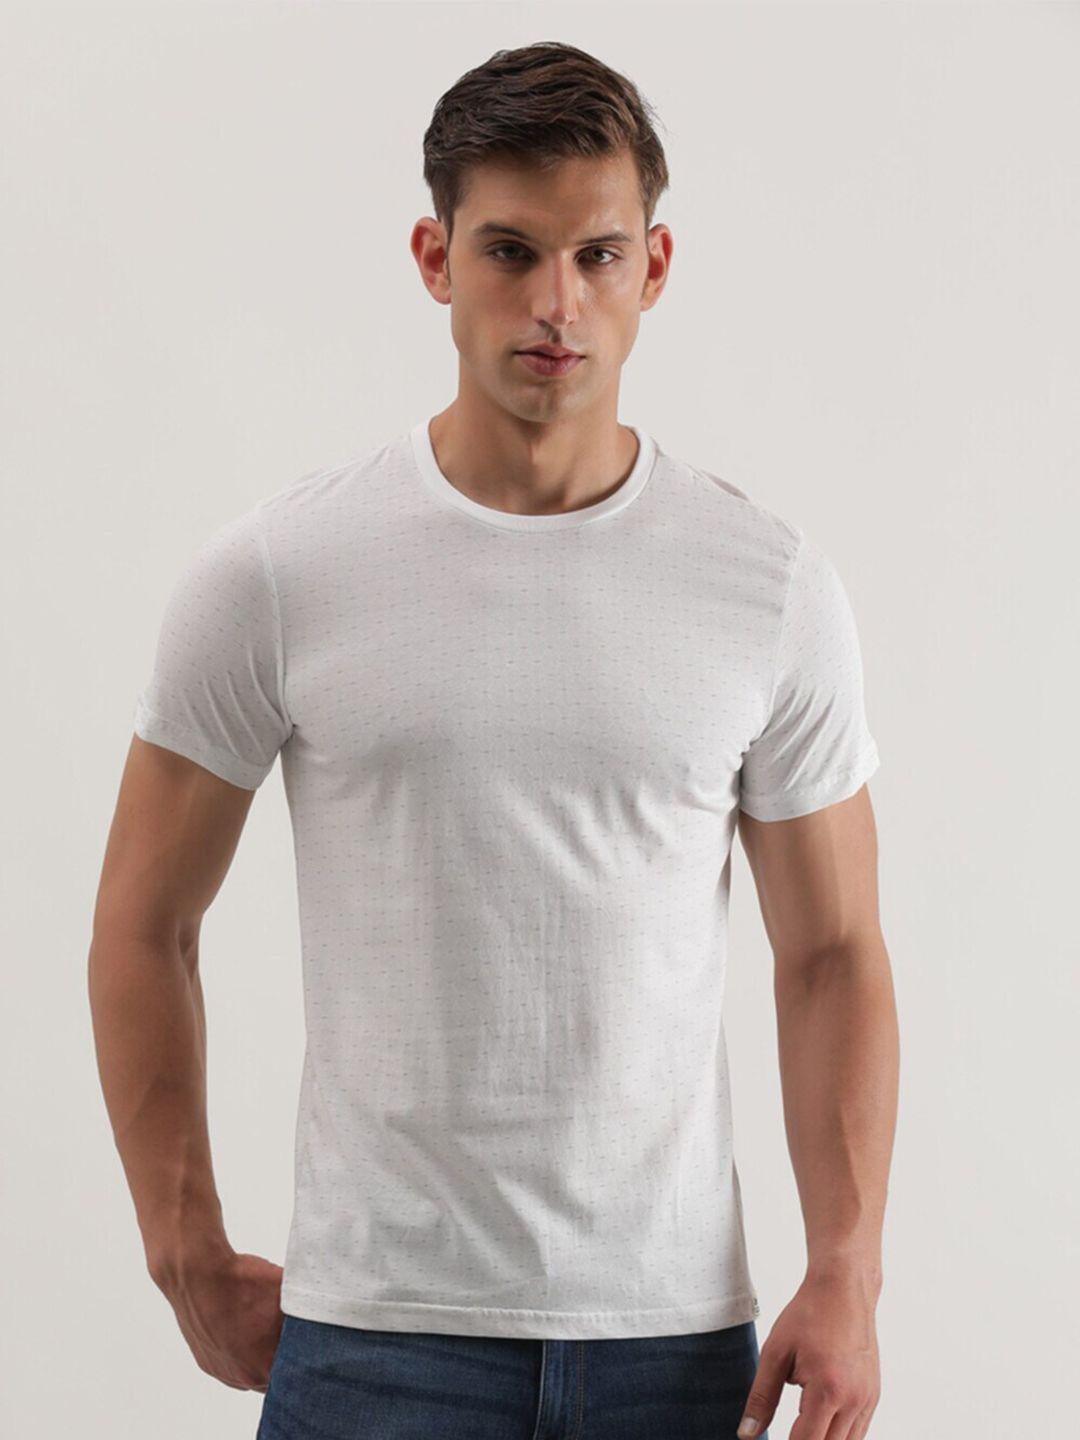 lee geometric printed round neck slim fit cotton t-shirt